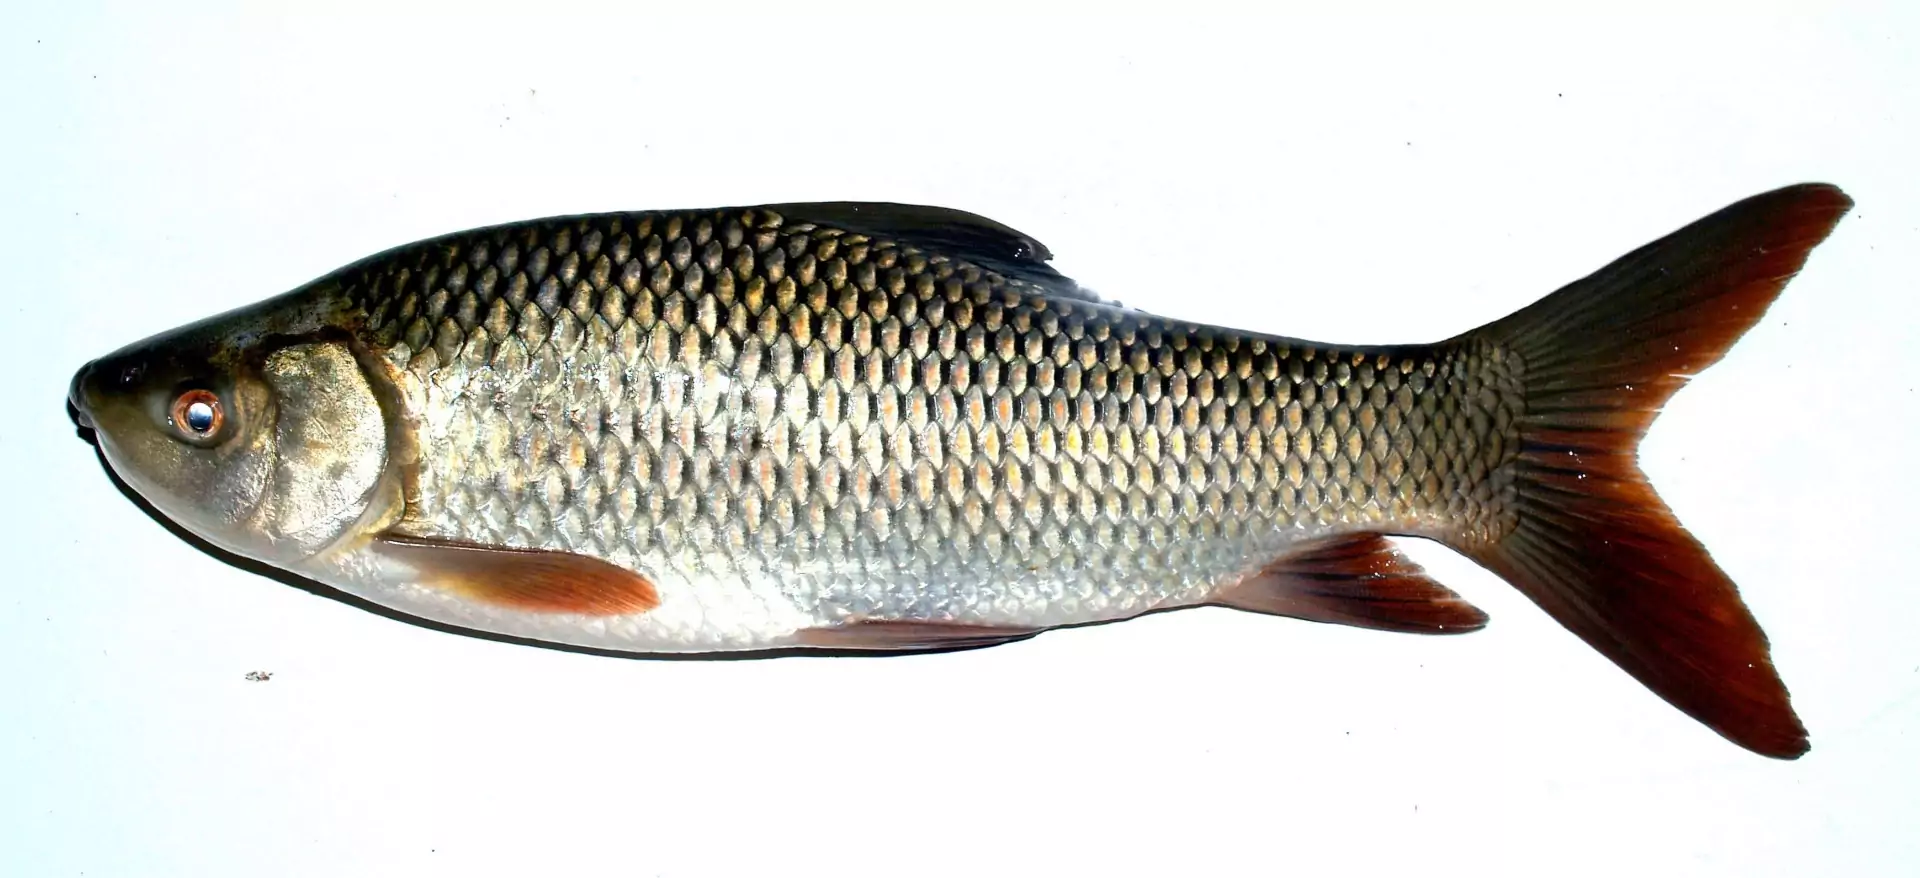 Rohu fish